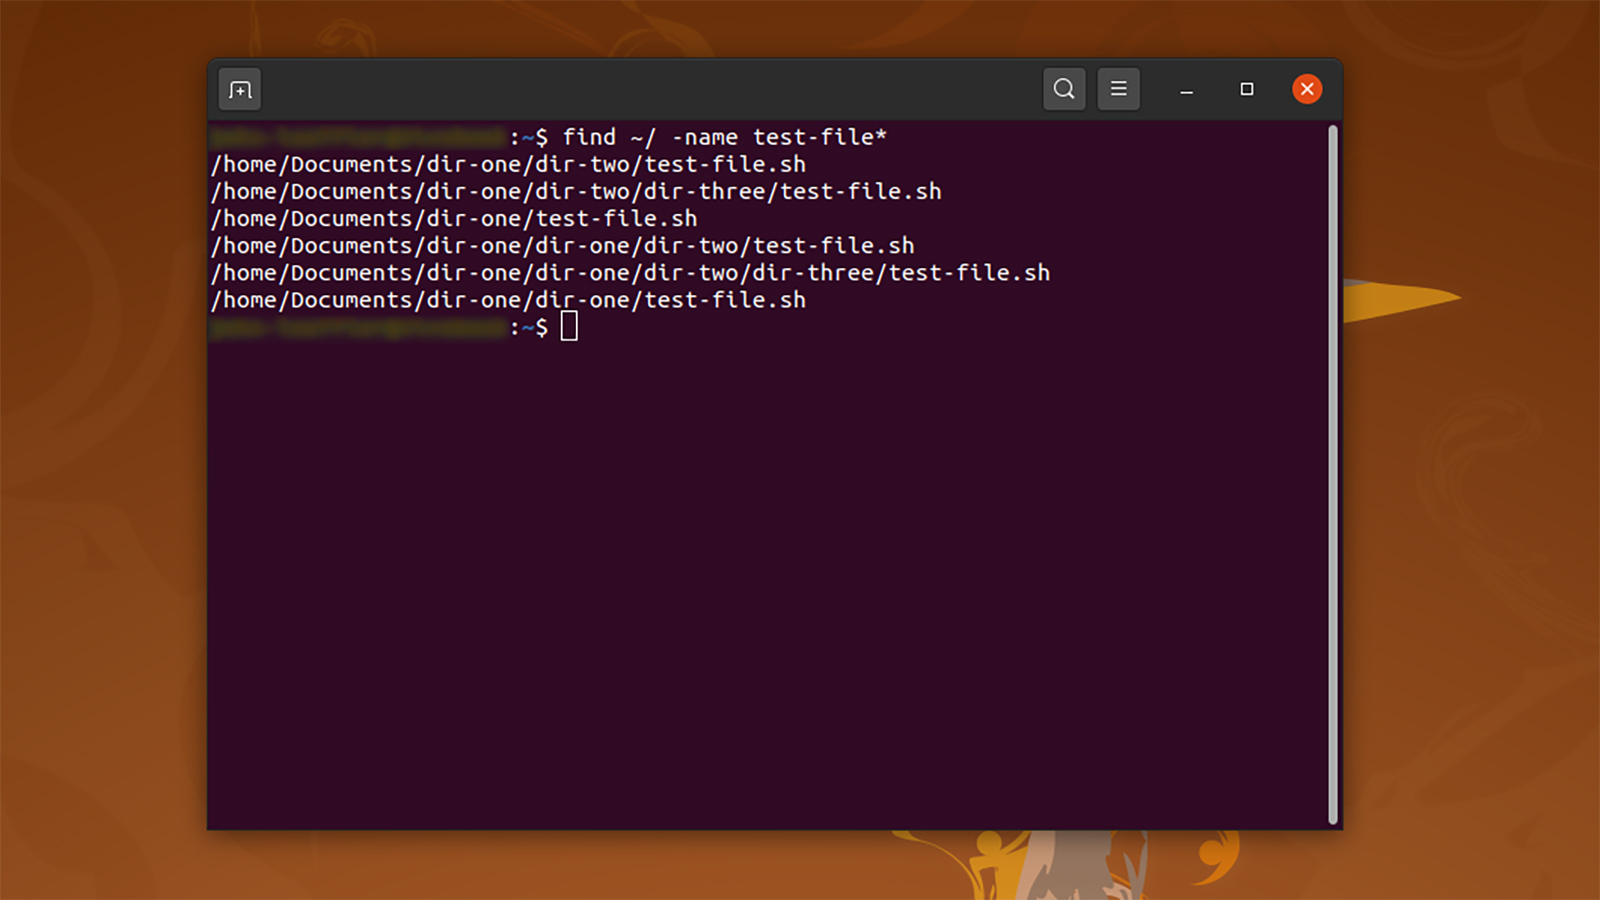 linux file copy log out